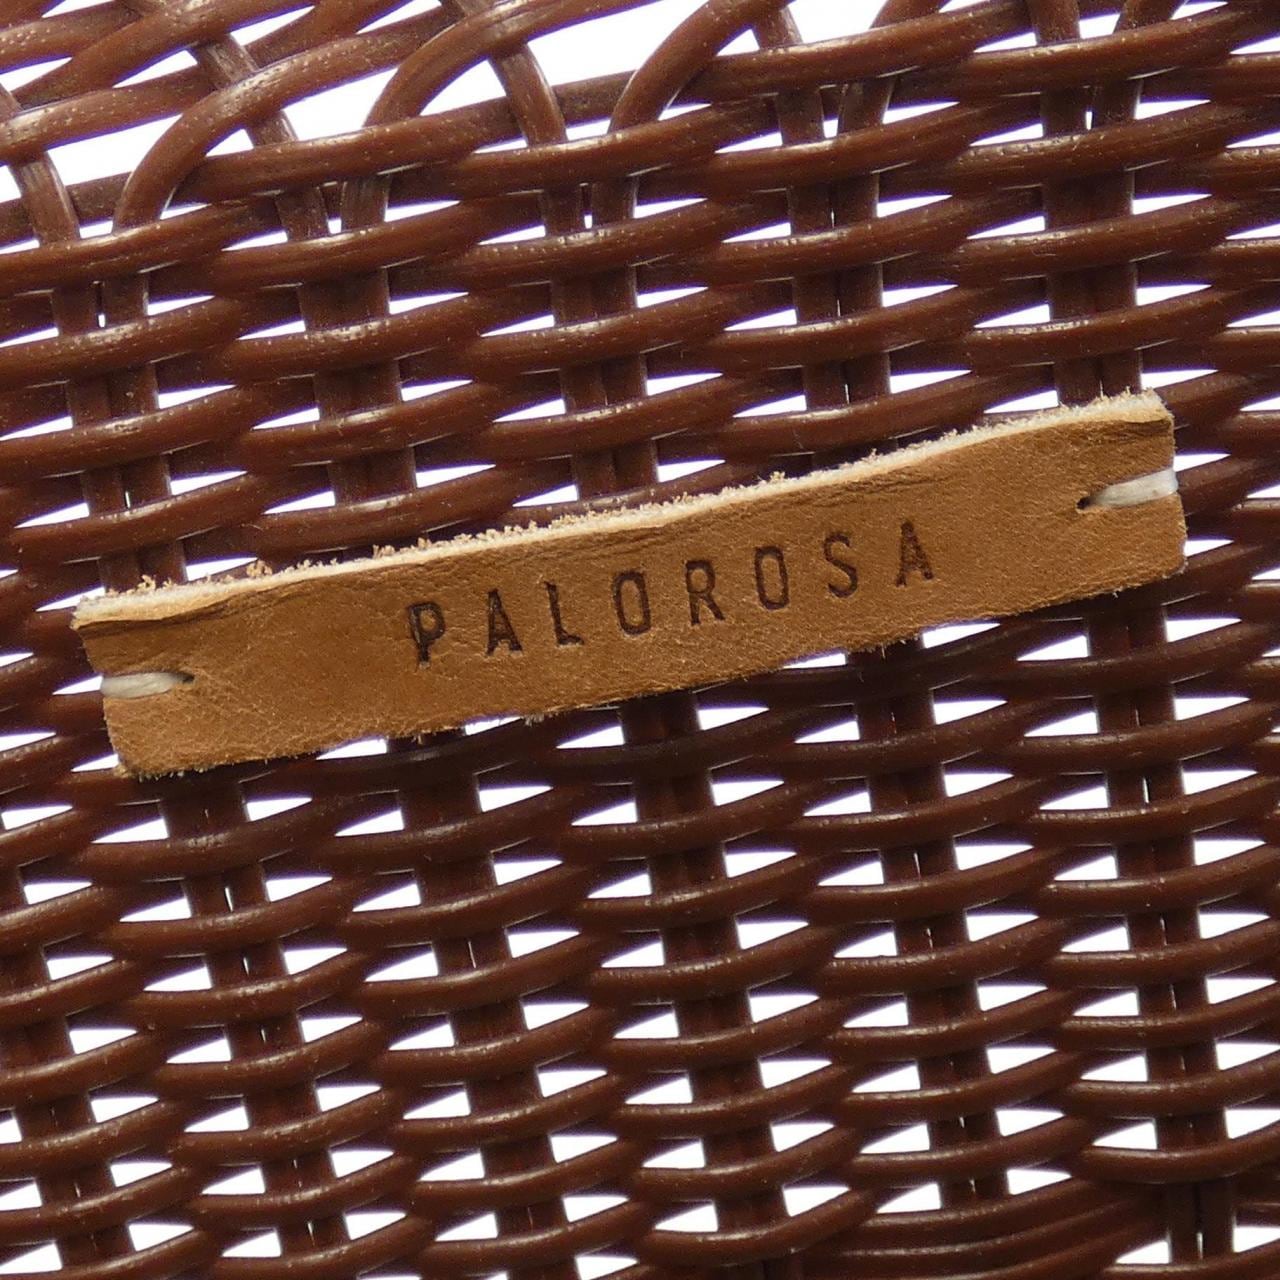 PALOROSA BAG